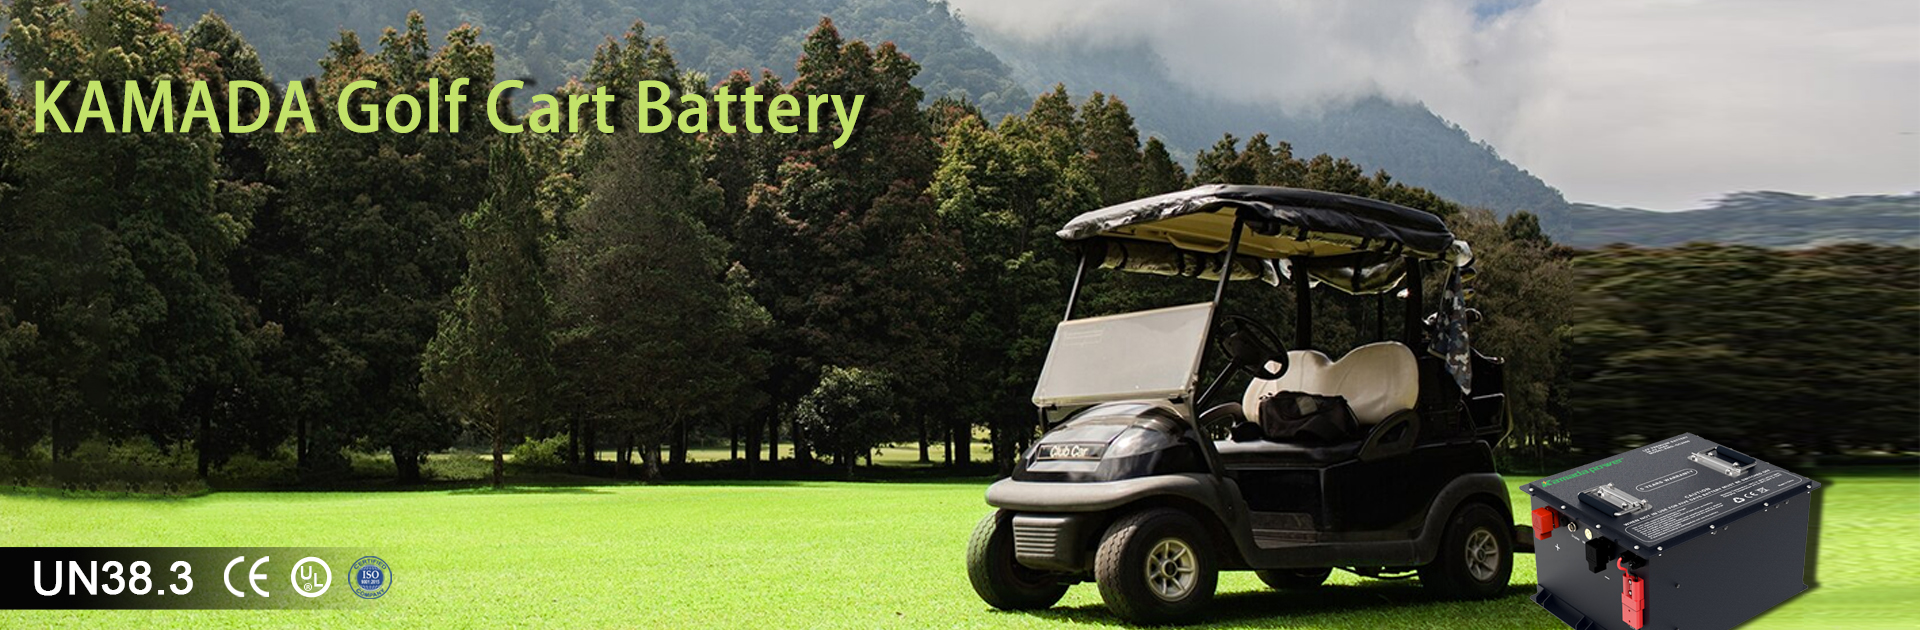 Monarcha Battery Cart Gailf Kamada